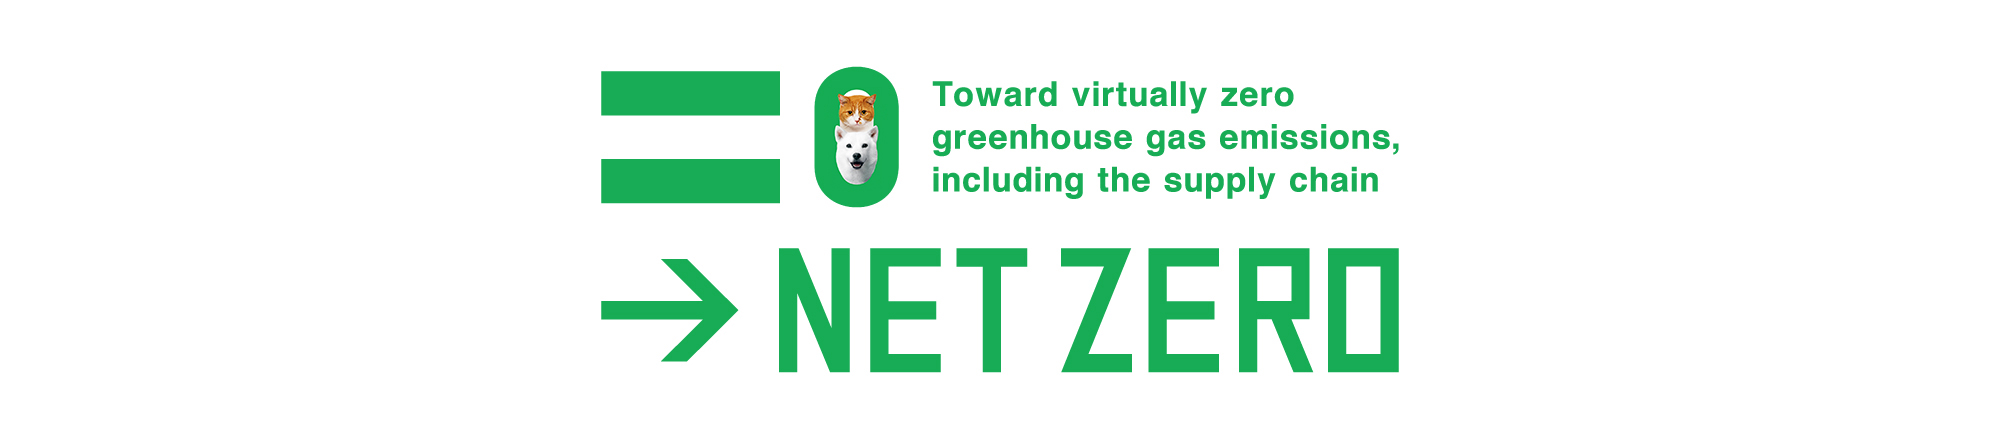 NET ZERO Toward virtually zero greenhouse gas emissions, including the supply chain